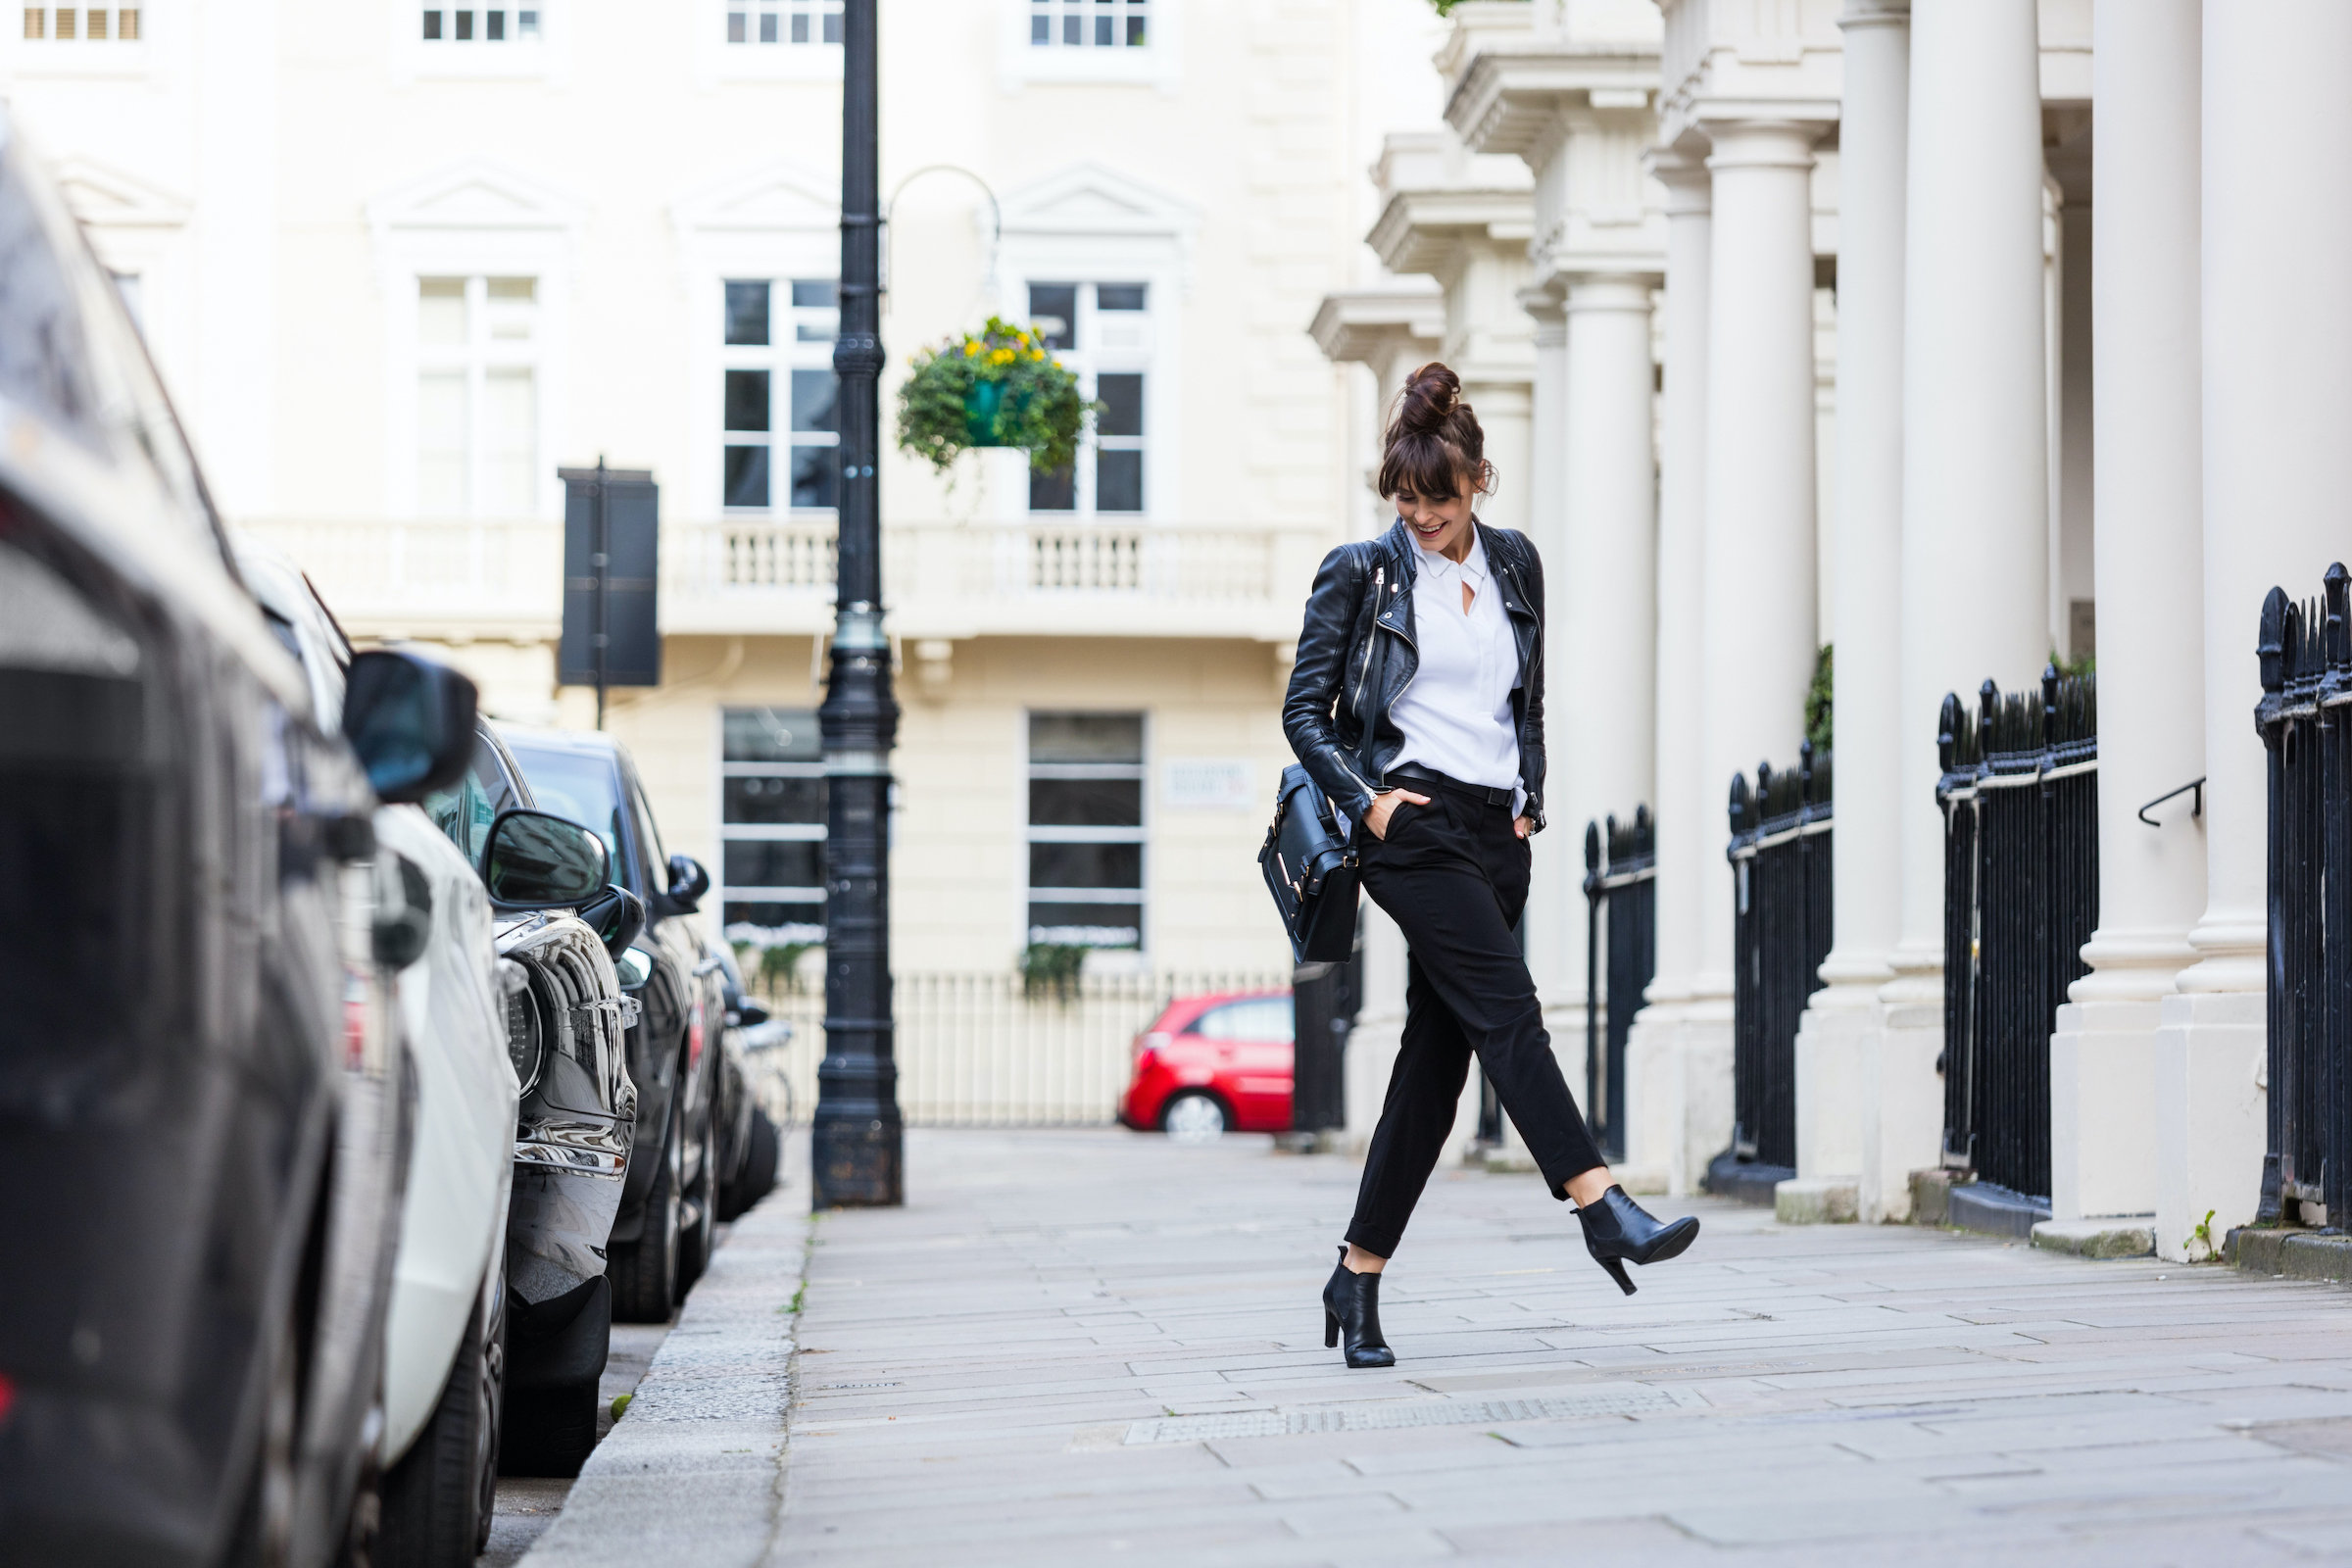 Get the look: tweed jacket and skinny jeans - Cheryl Shops